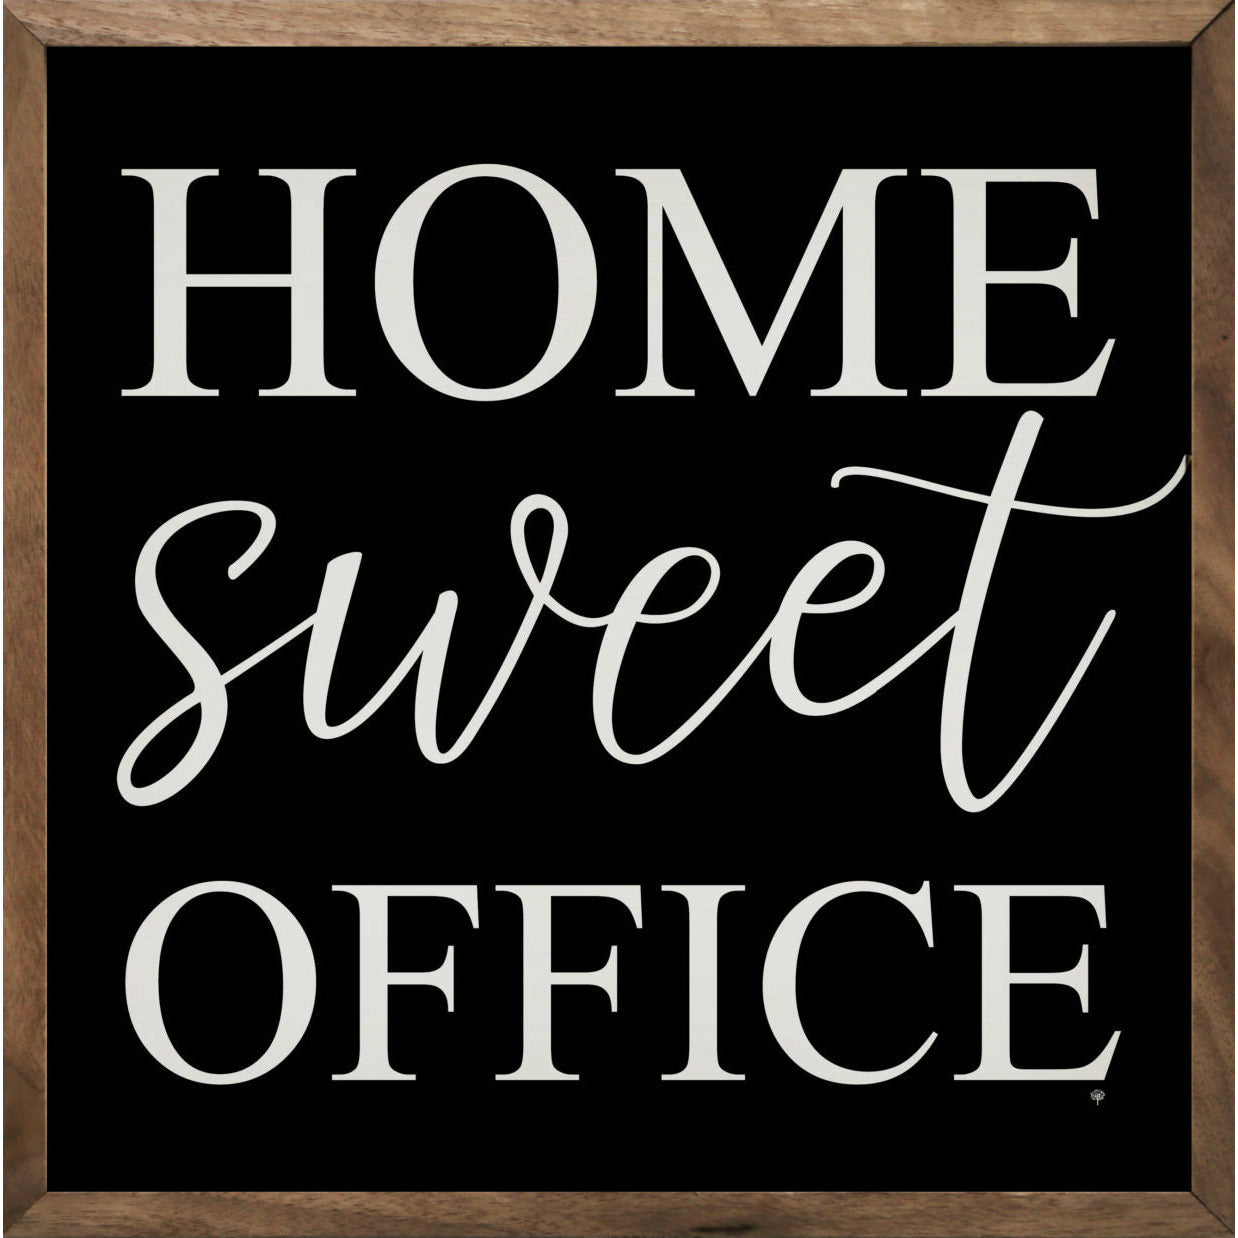 Home Sweet Office Wood Framed Print